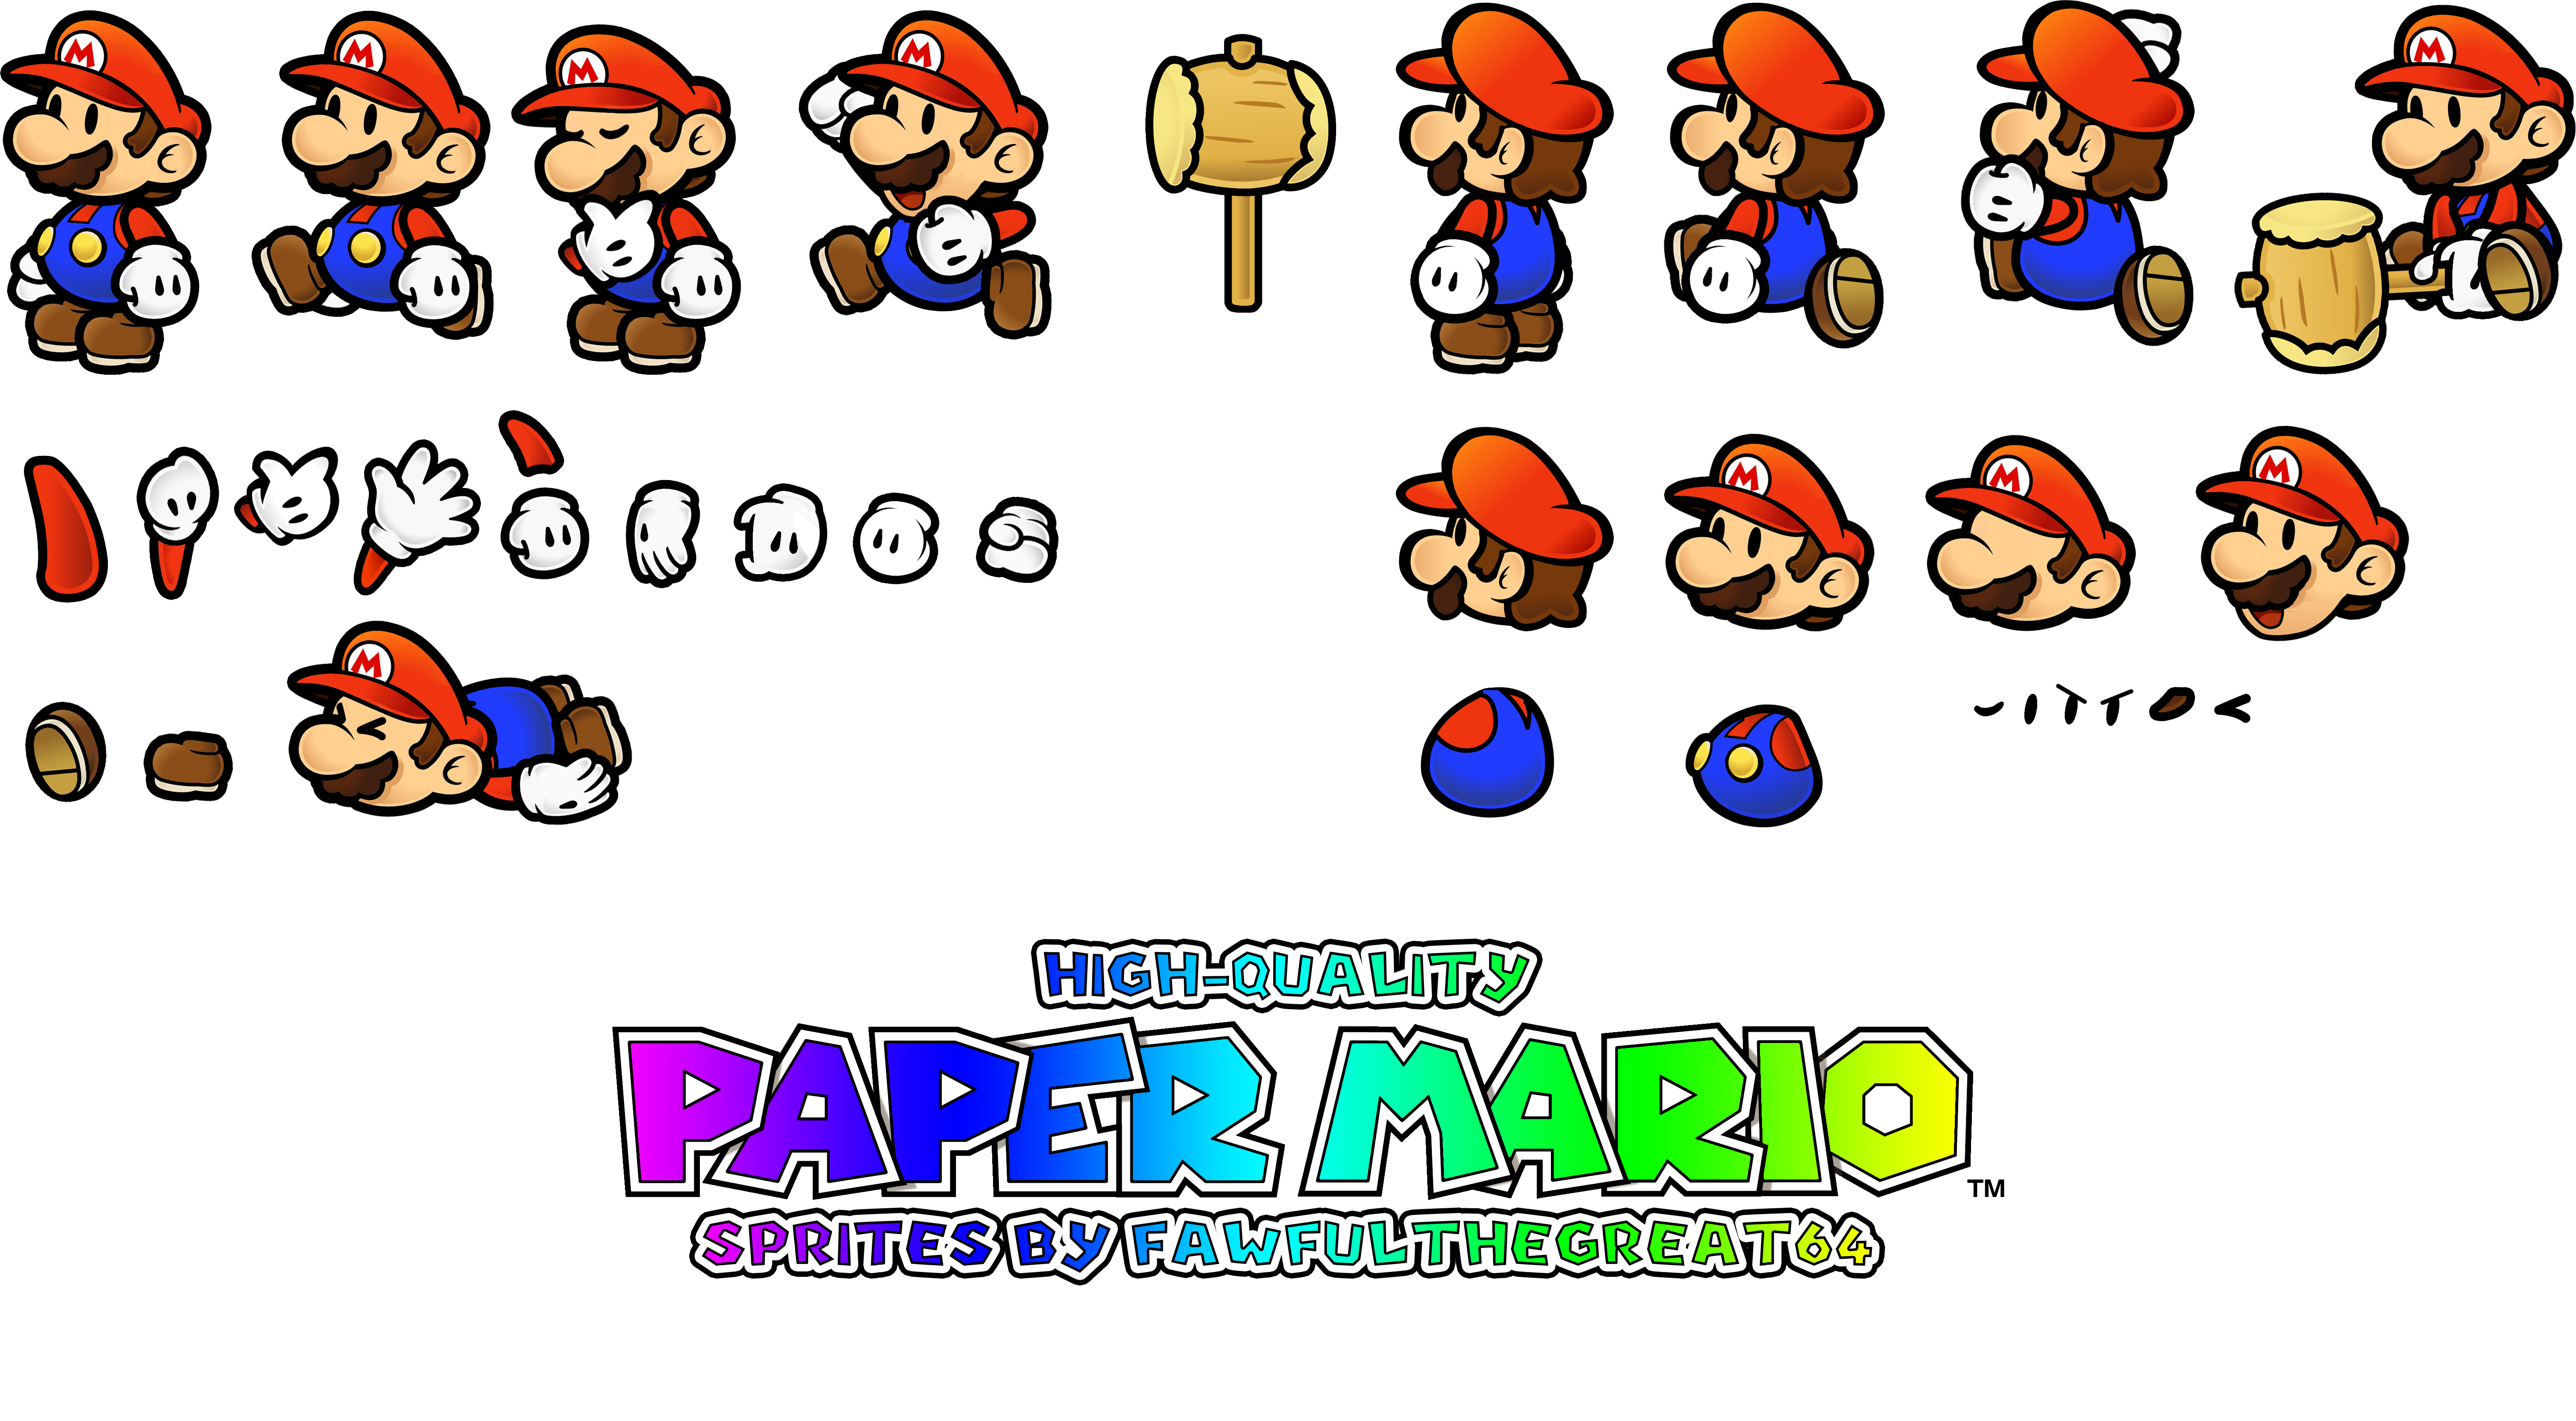 Super mario sprites. Спрайты super Mario 64. Спрайт для игры 2д Марио. Спрайты для Марио 2d. Super paper Mario Sprites.